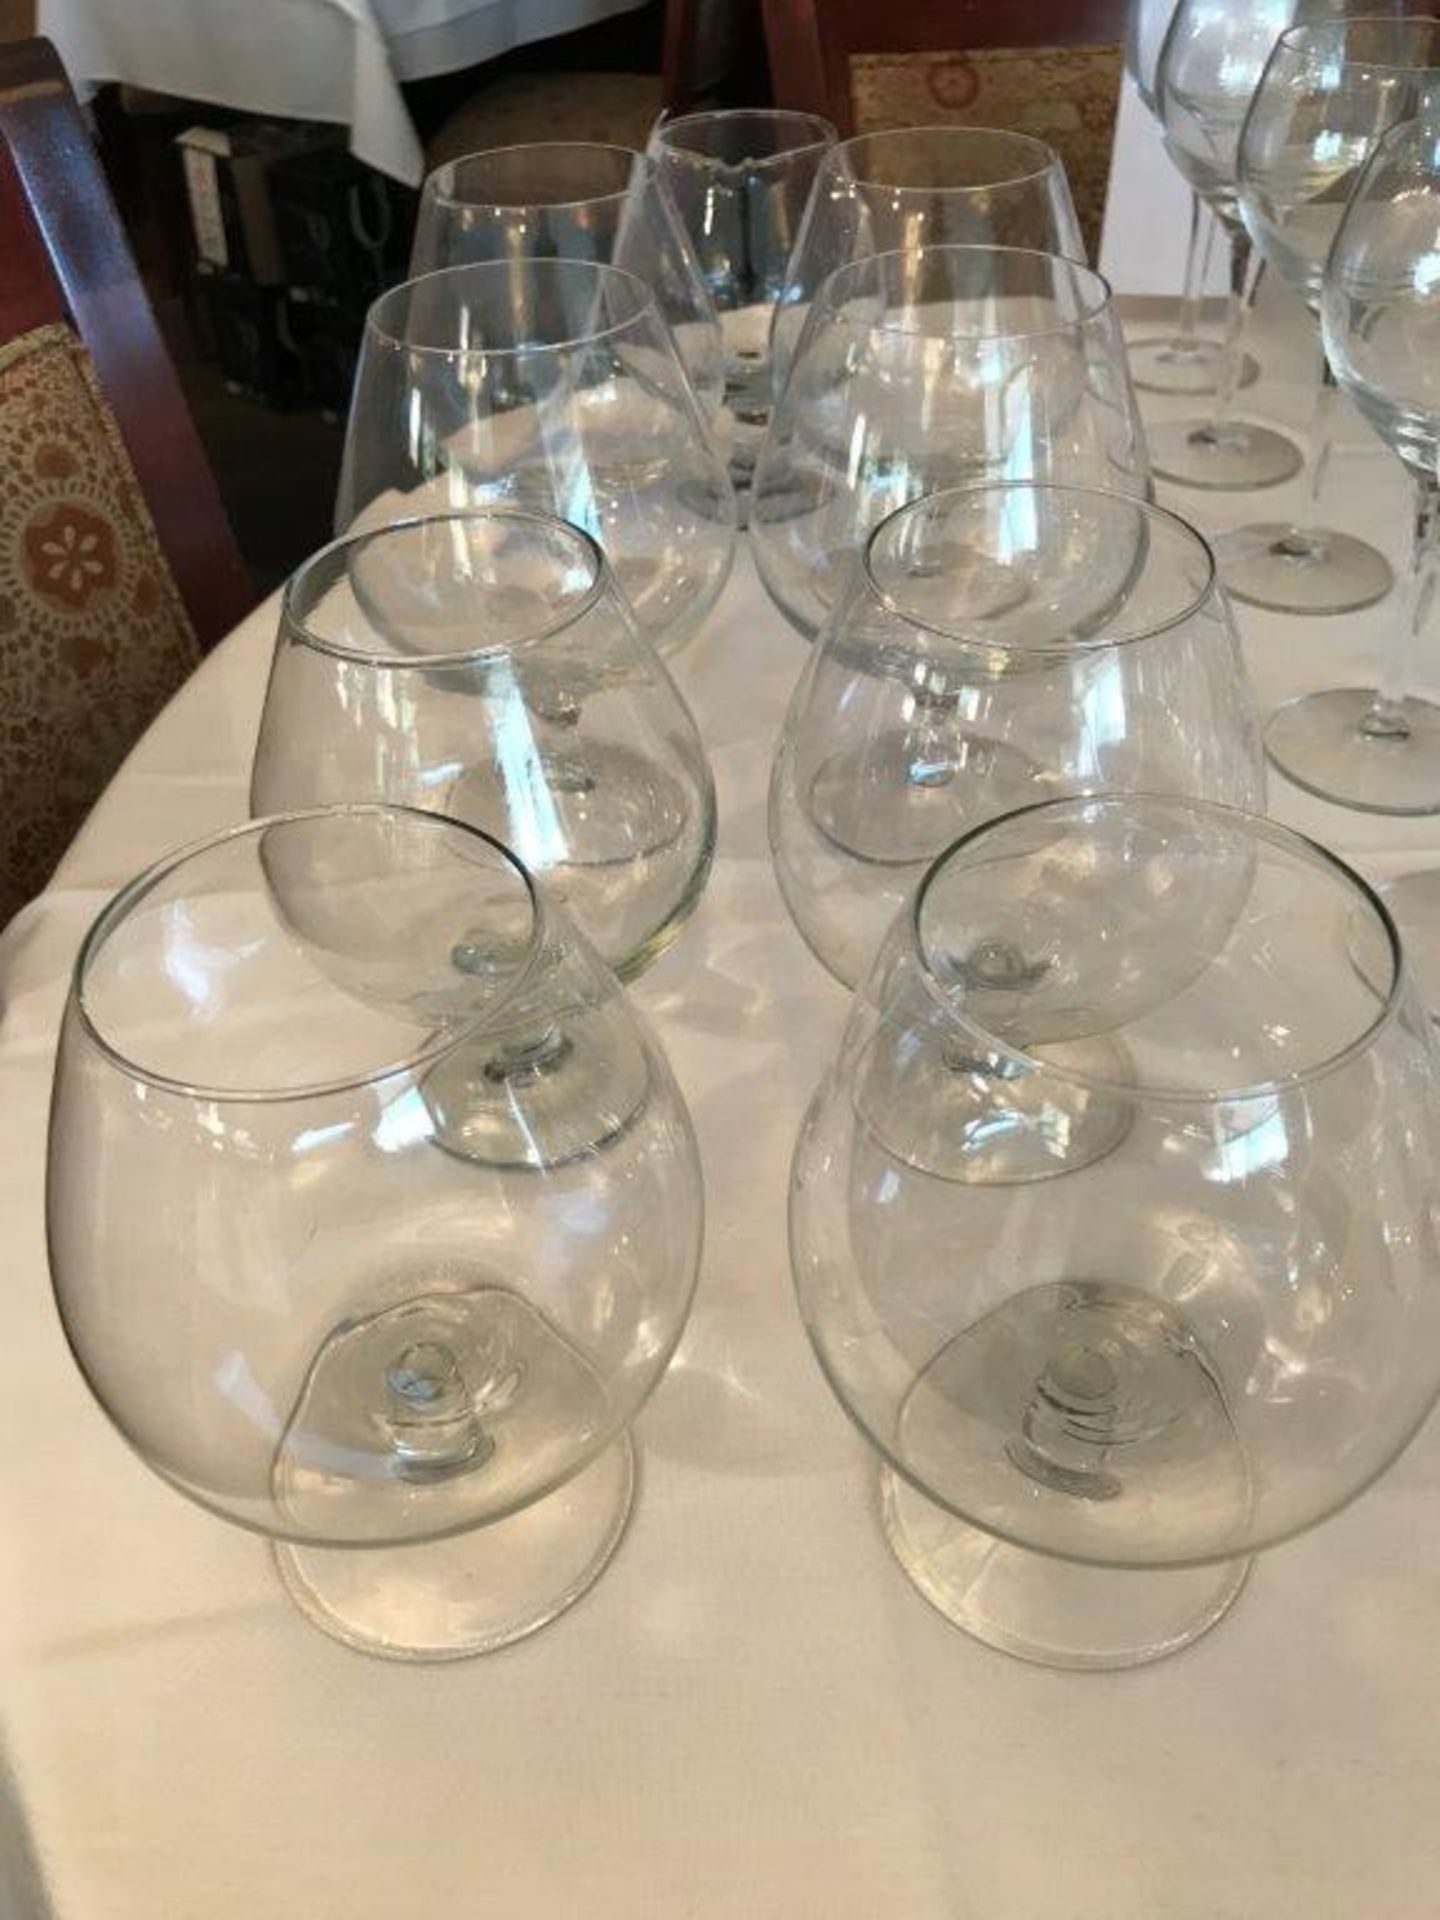 Gran brandy snifter glasses - Image 2 of 2